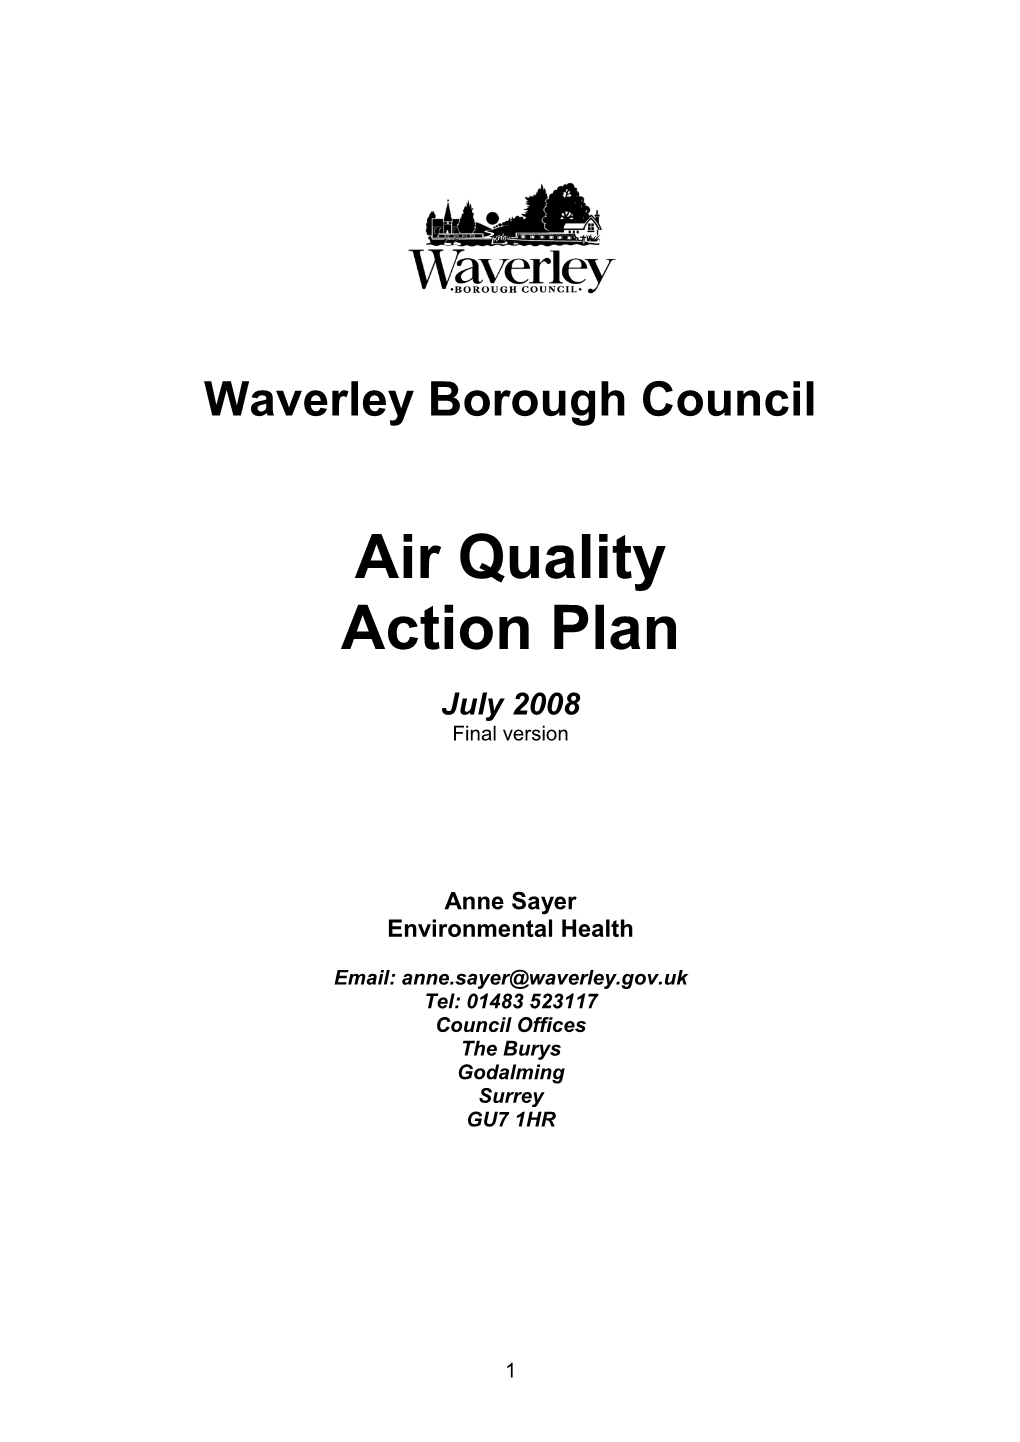 Waverley Borough Council Draft Air Quality Action Plan